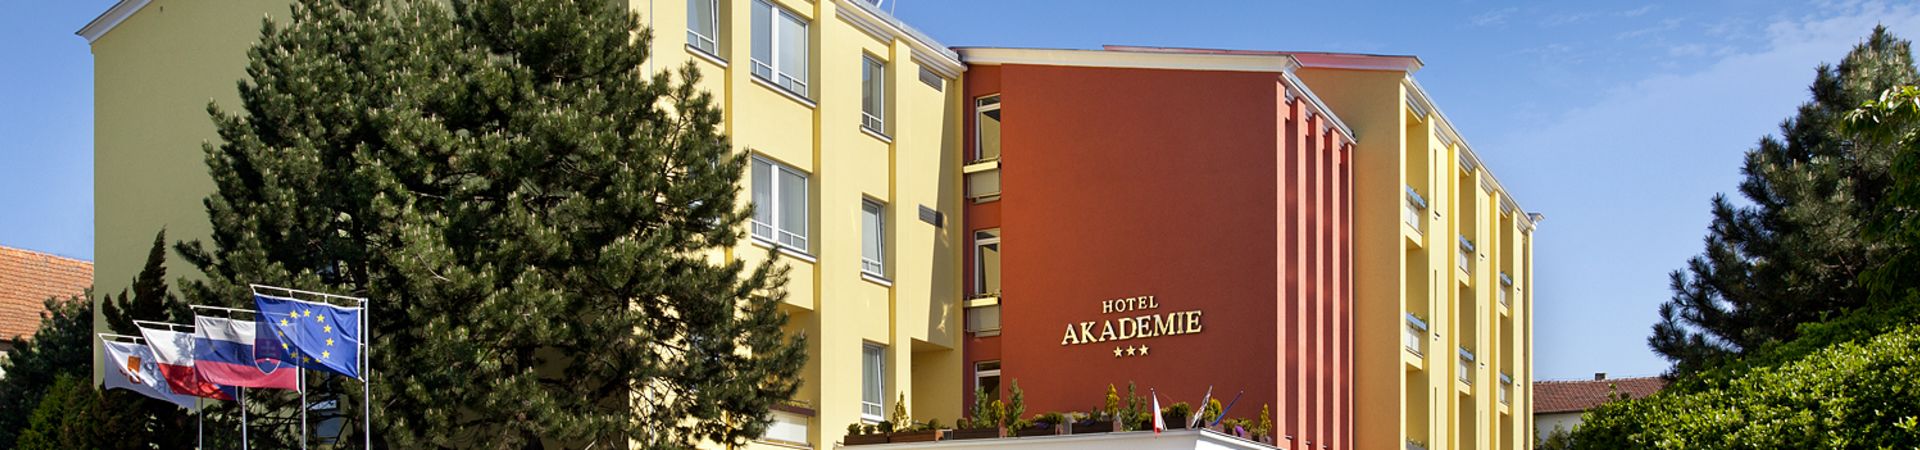 Hotel Akademie - Velké Bílovice